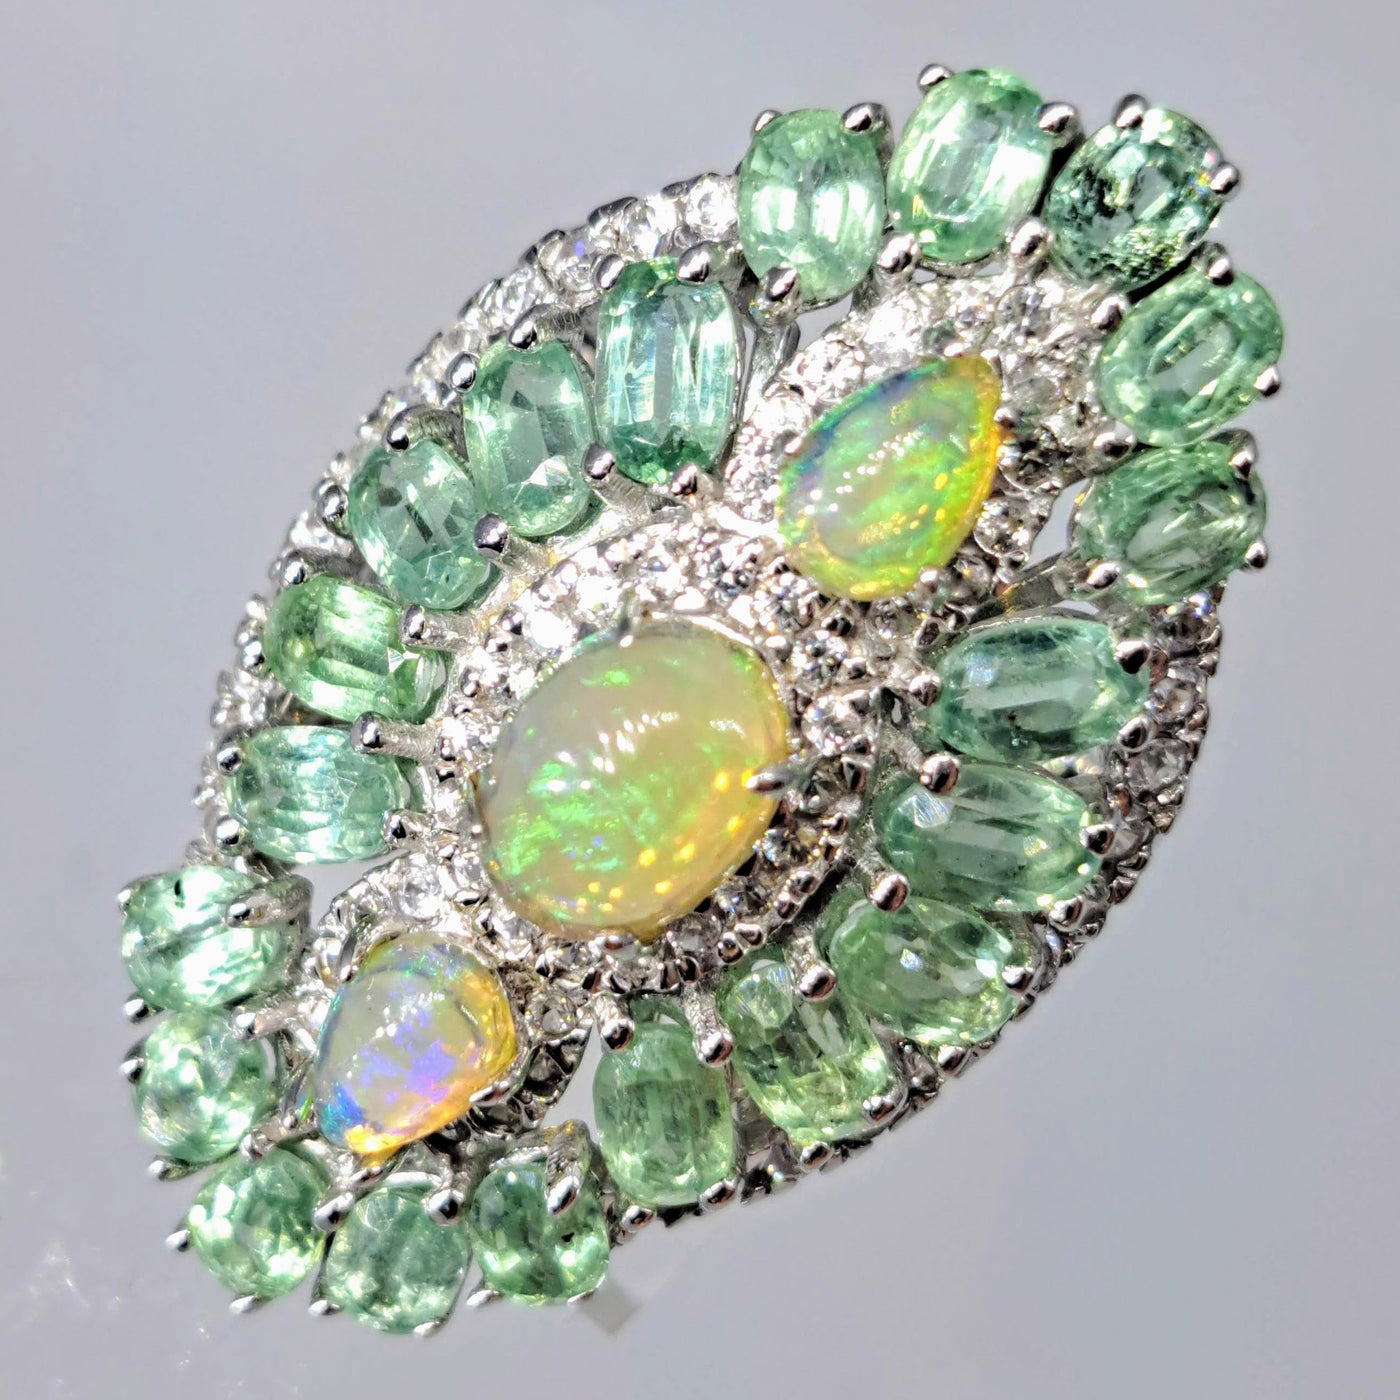 "Minty Fresh" Sz 6 Ring - White Opal, Green Kyanite, White Zircon, Anti-tarnish Sterling